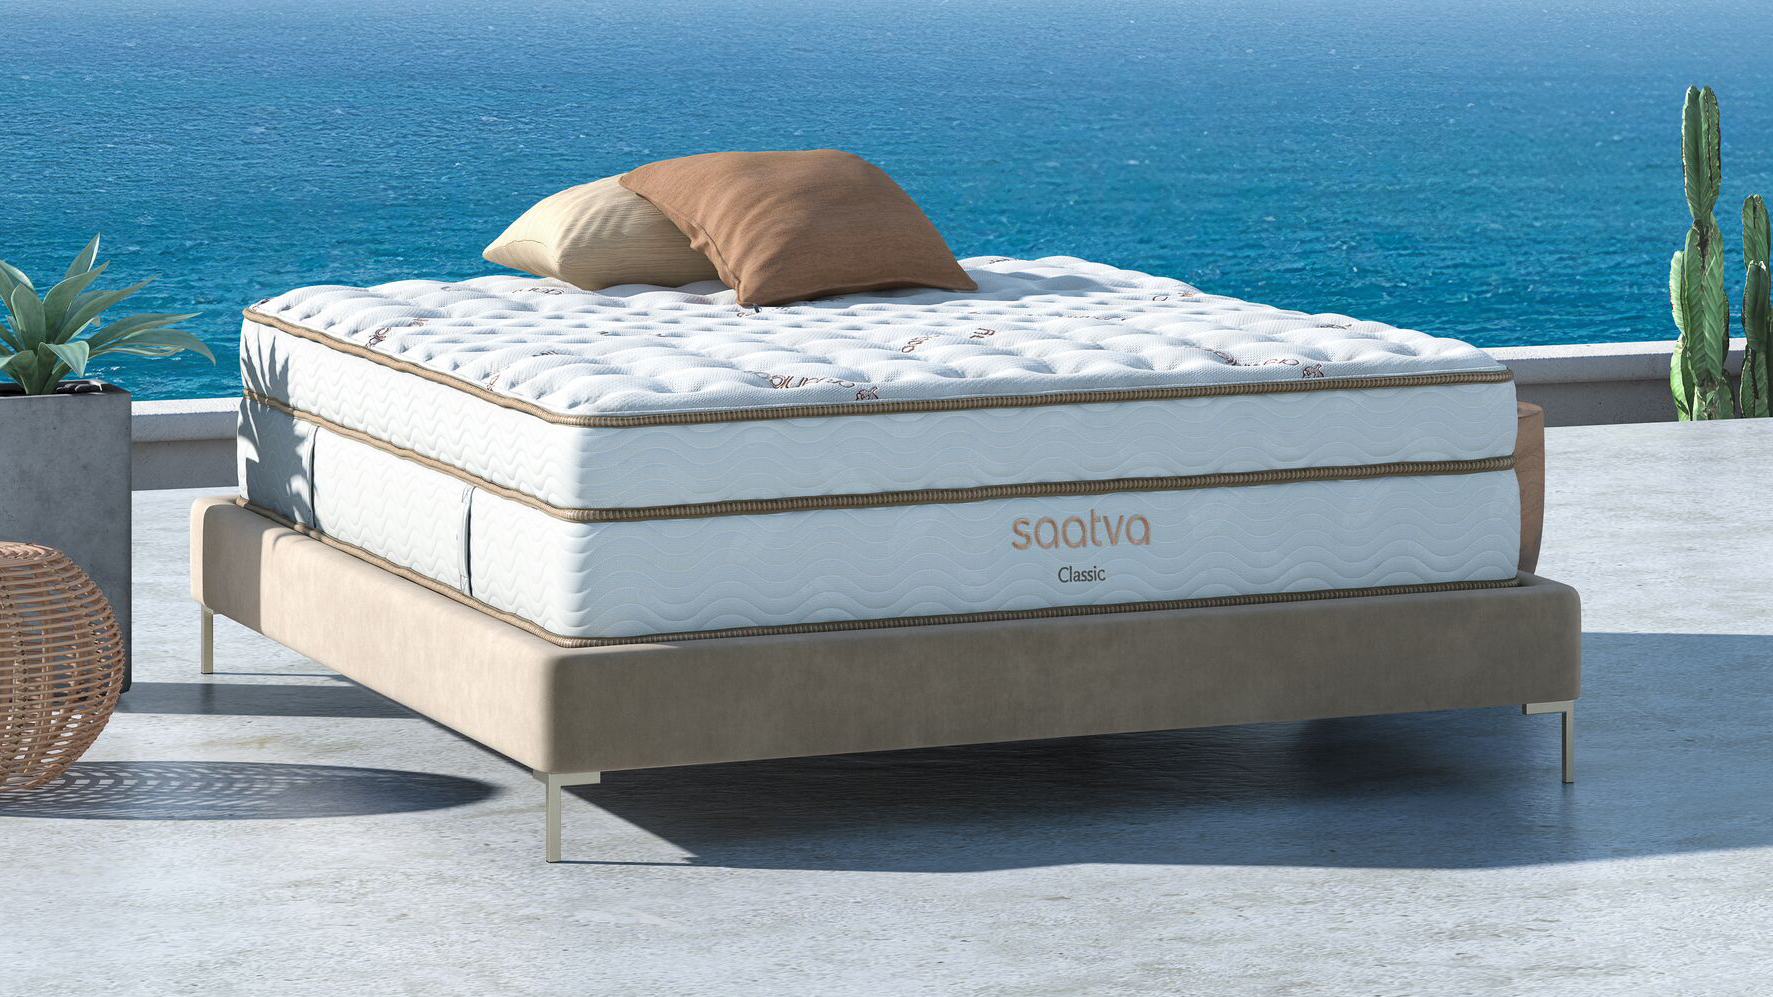 Saatva Classic mattress review